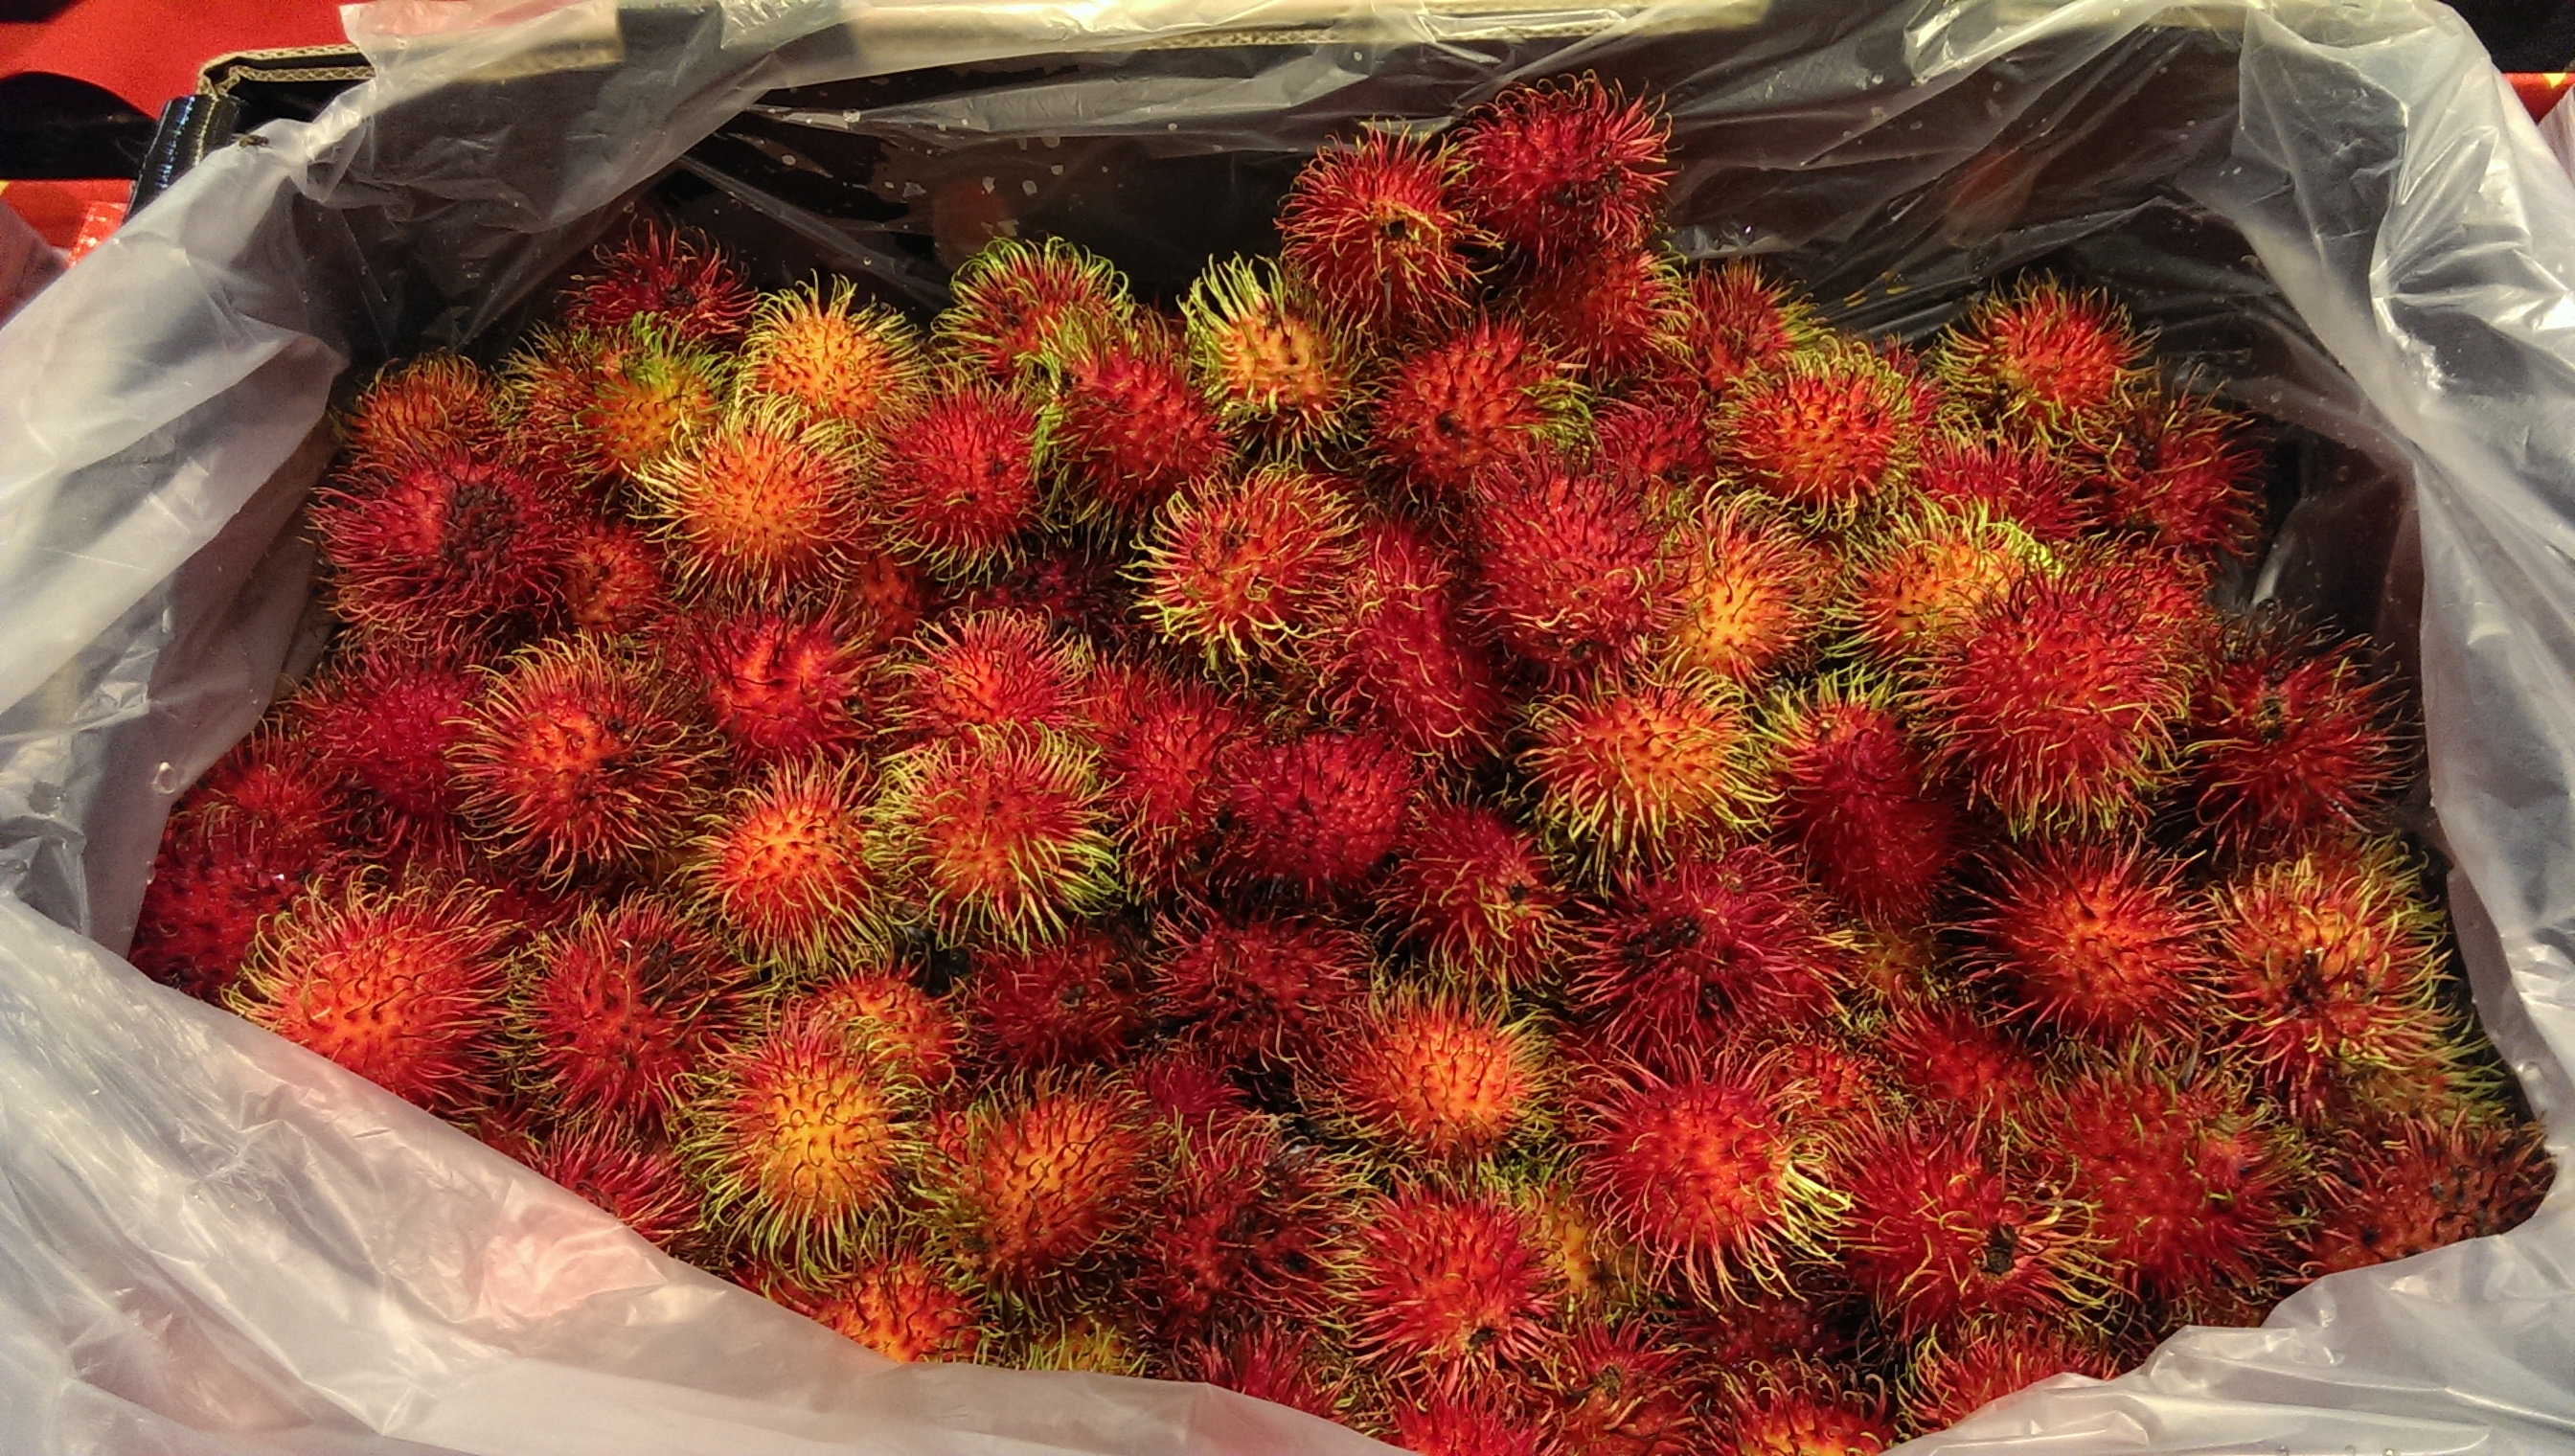 hairy strawberry fruit